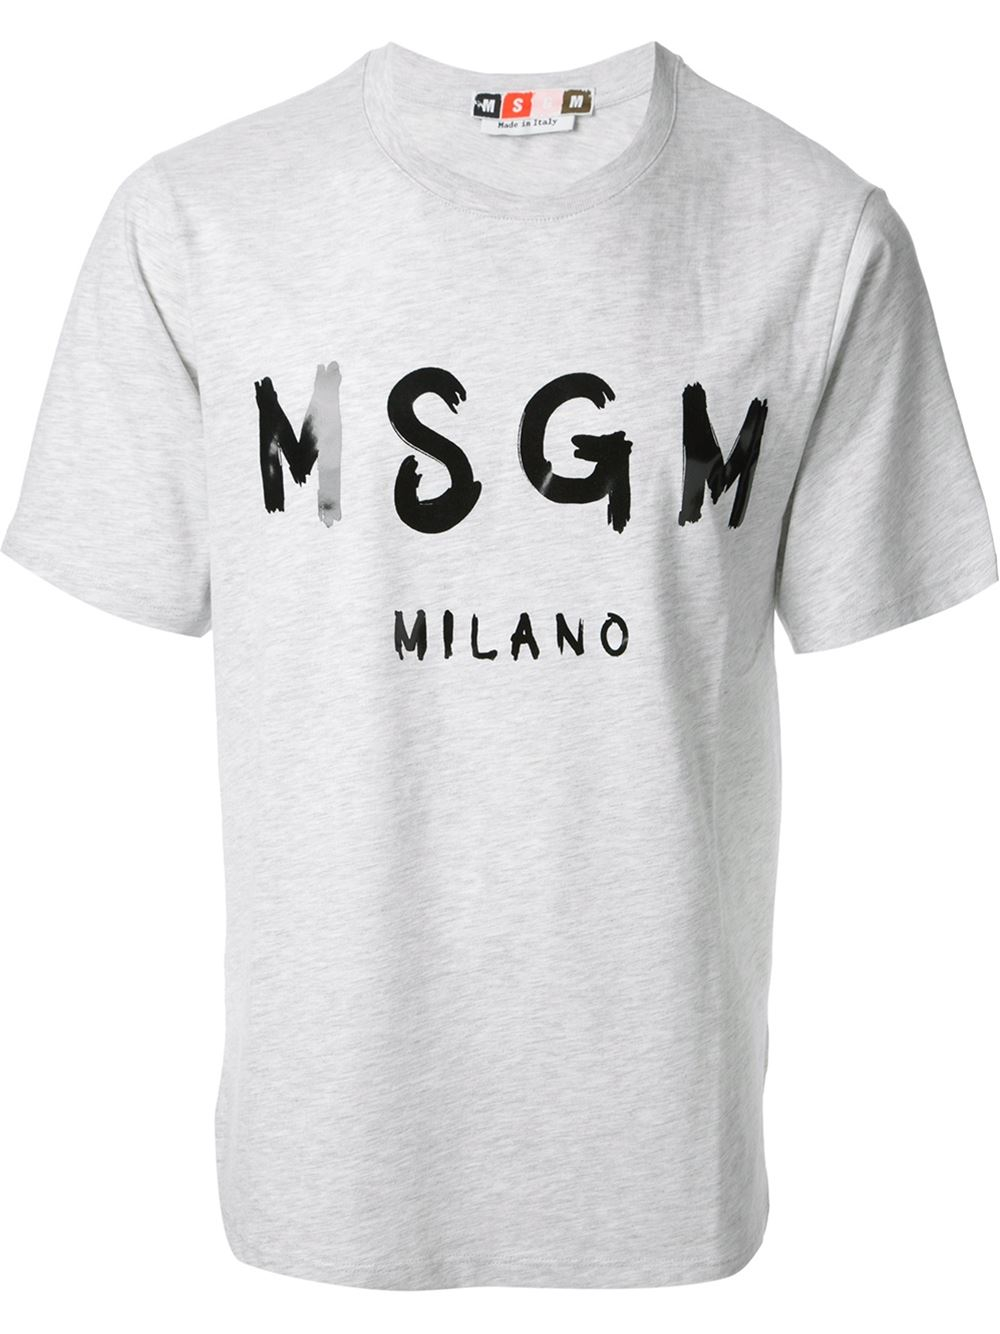 Lyst - Msgm Logo Print T-Shirt in Gray for Men